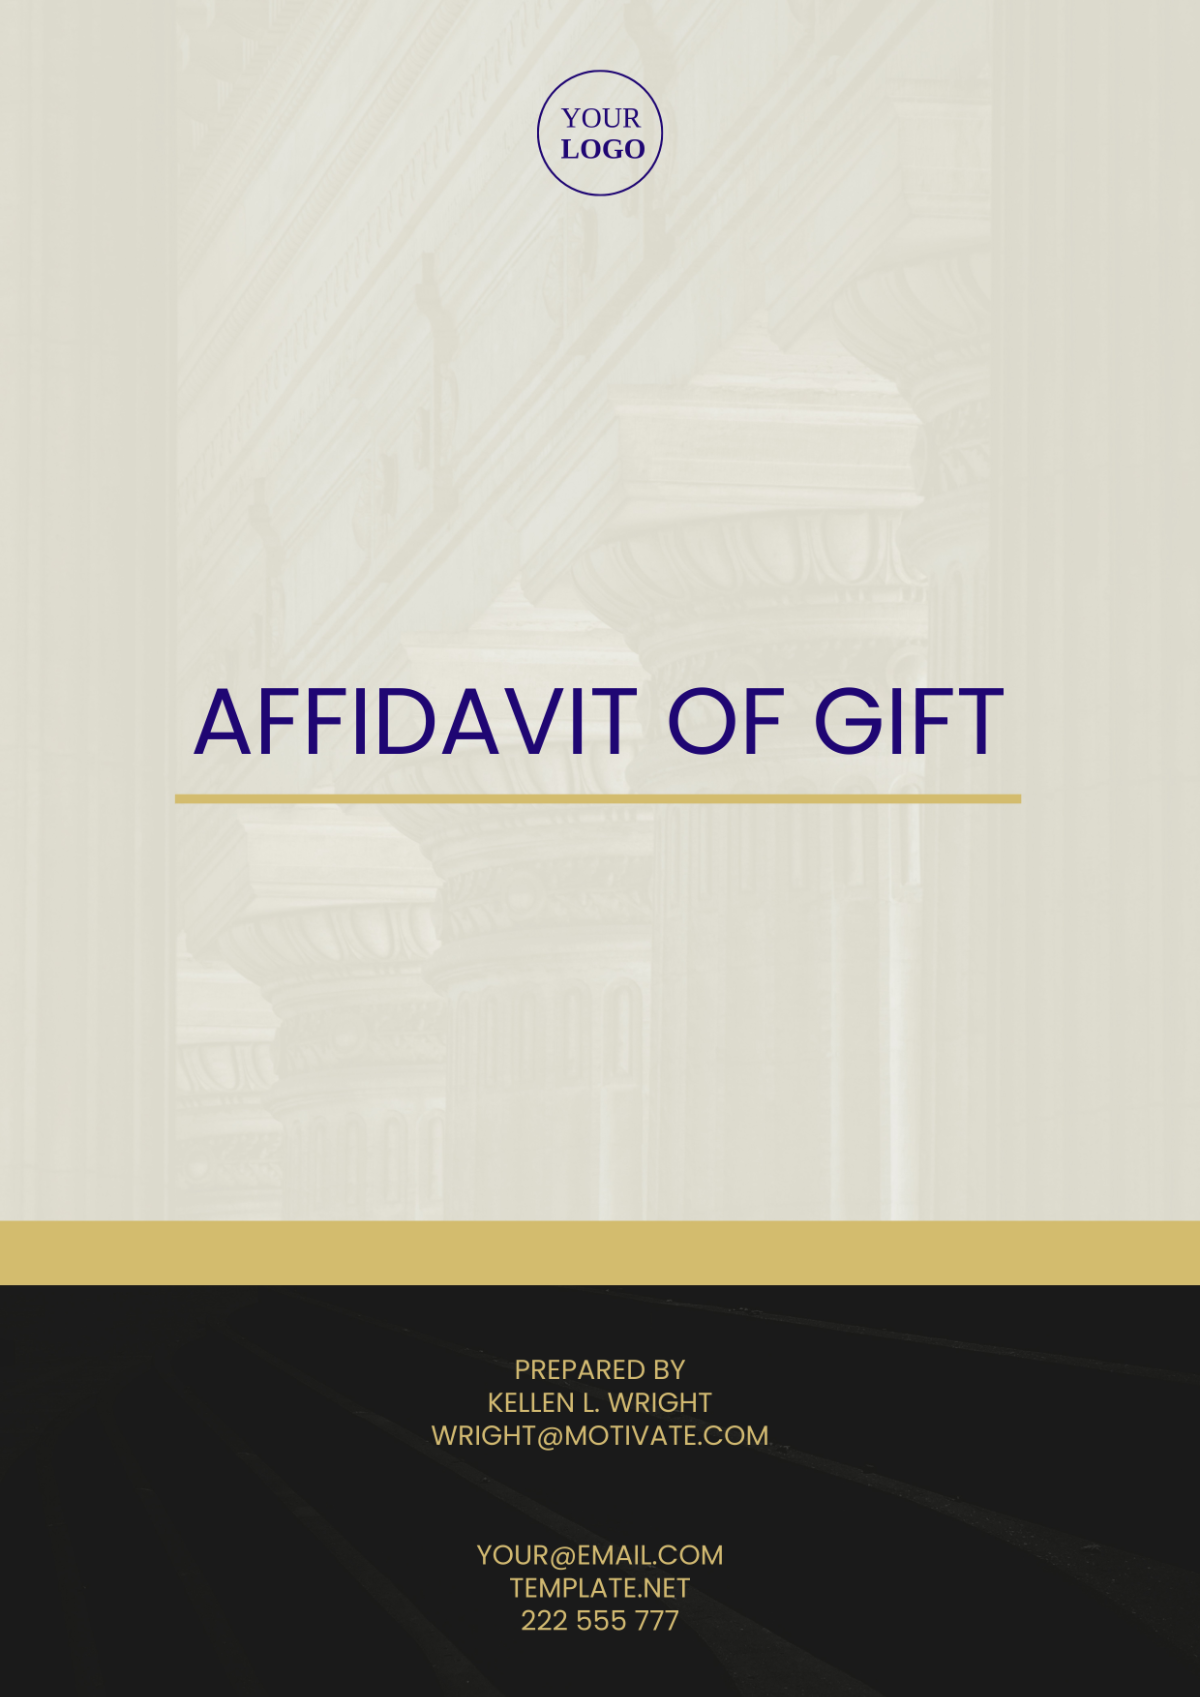 Iowa Affidavit of Gift Template